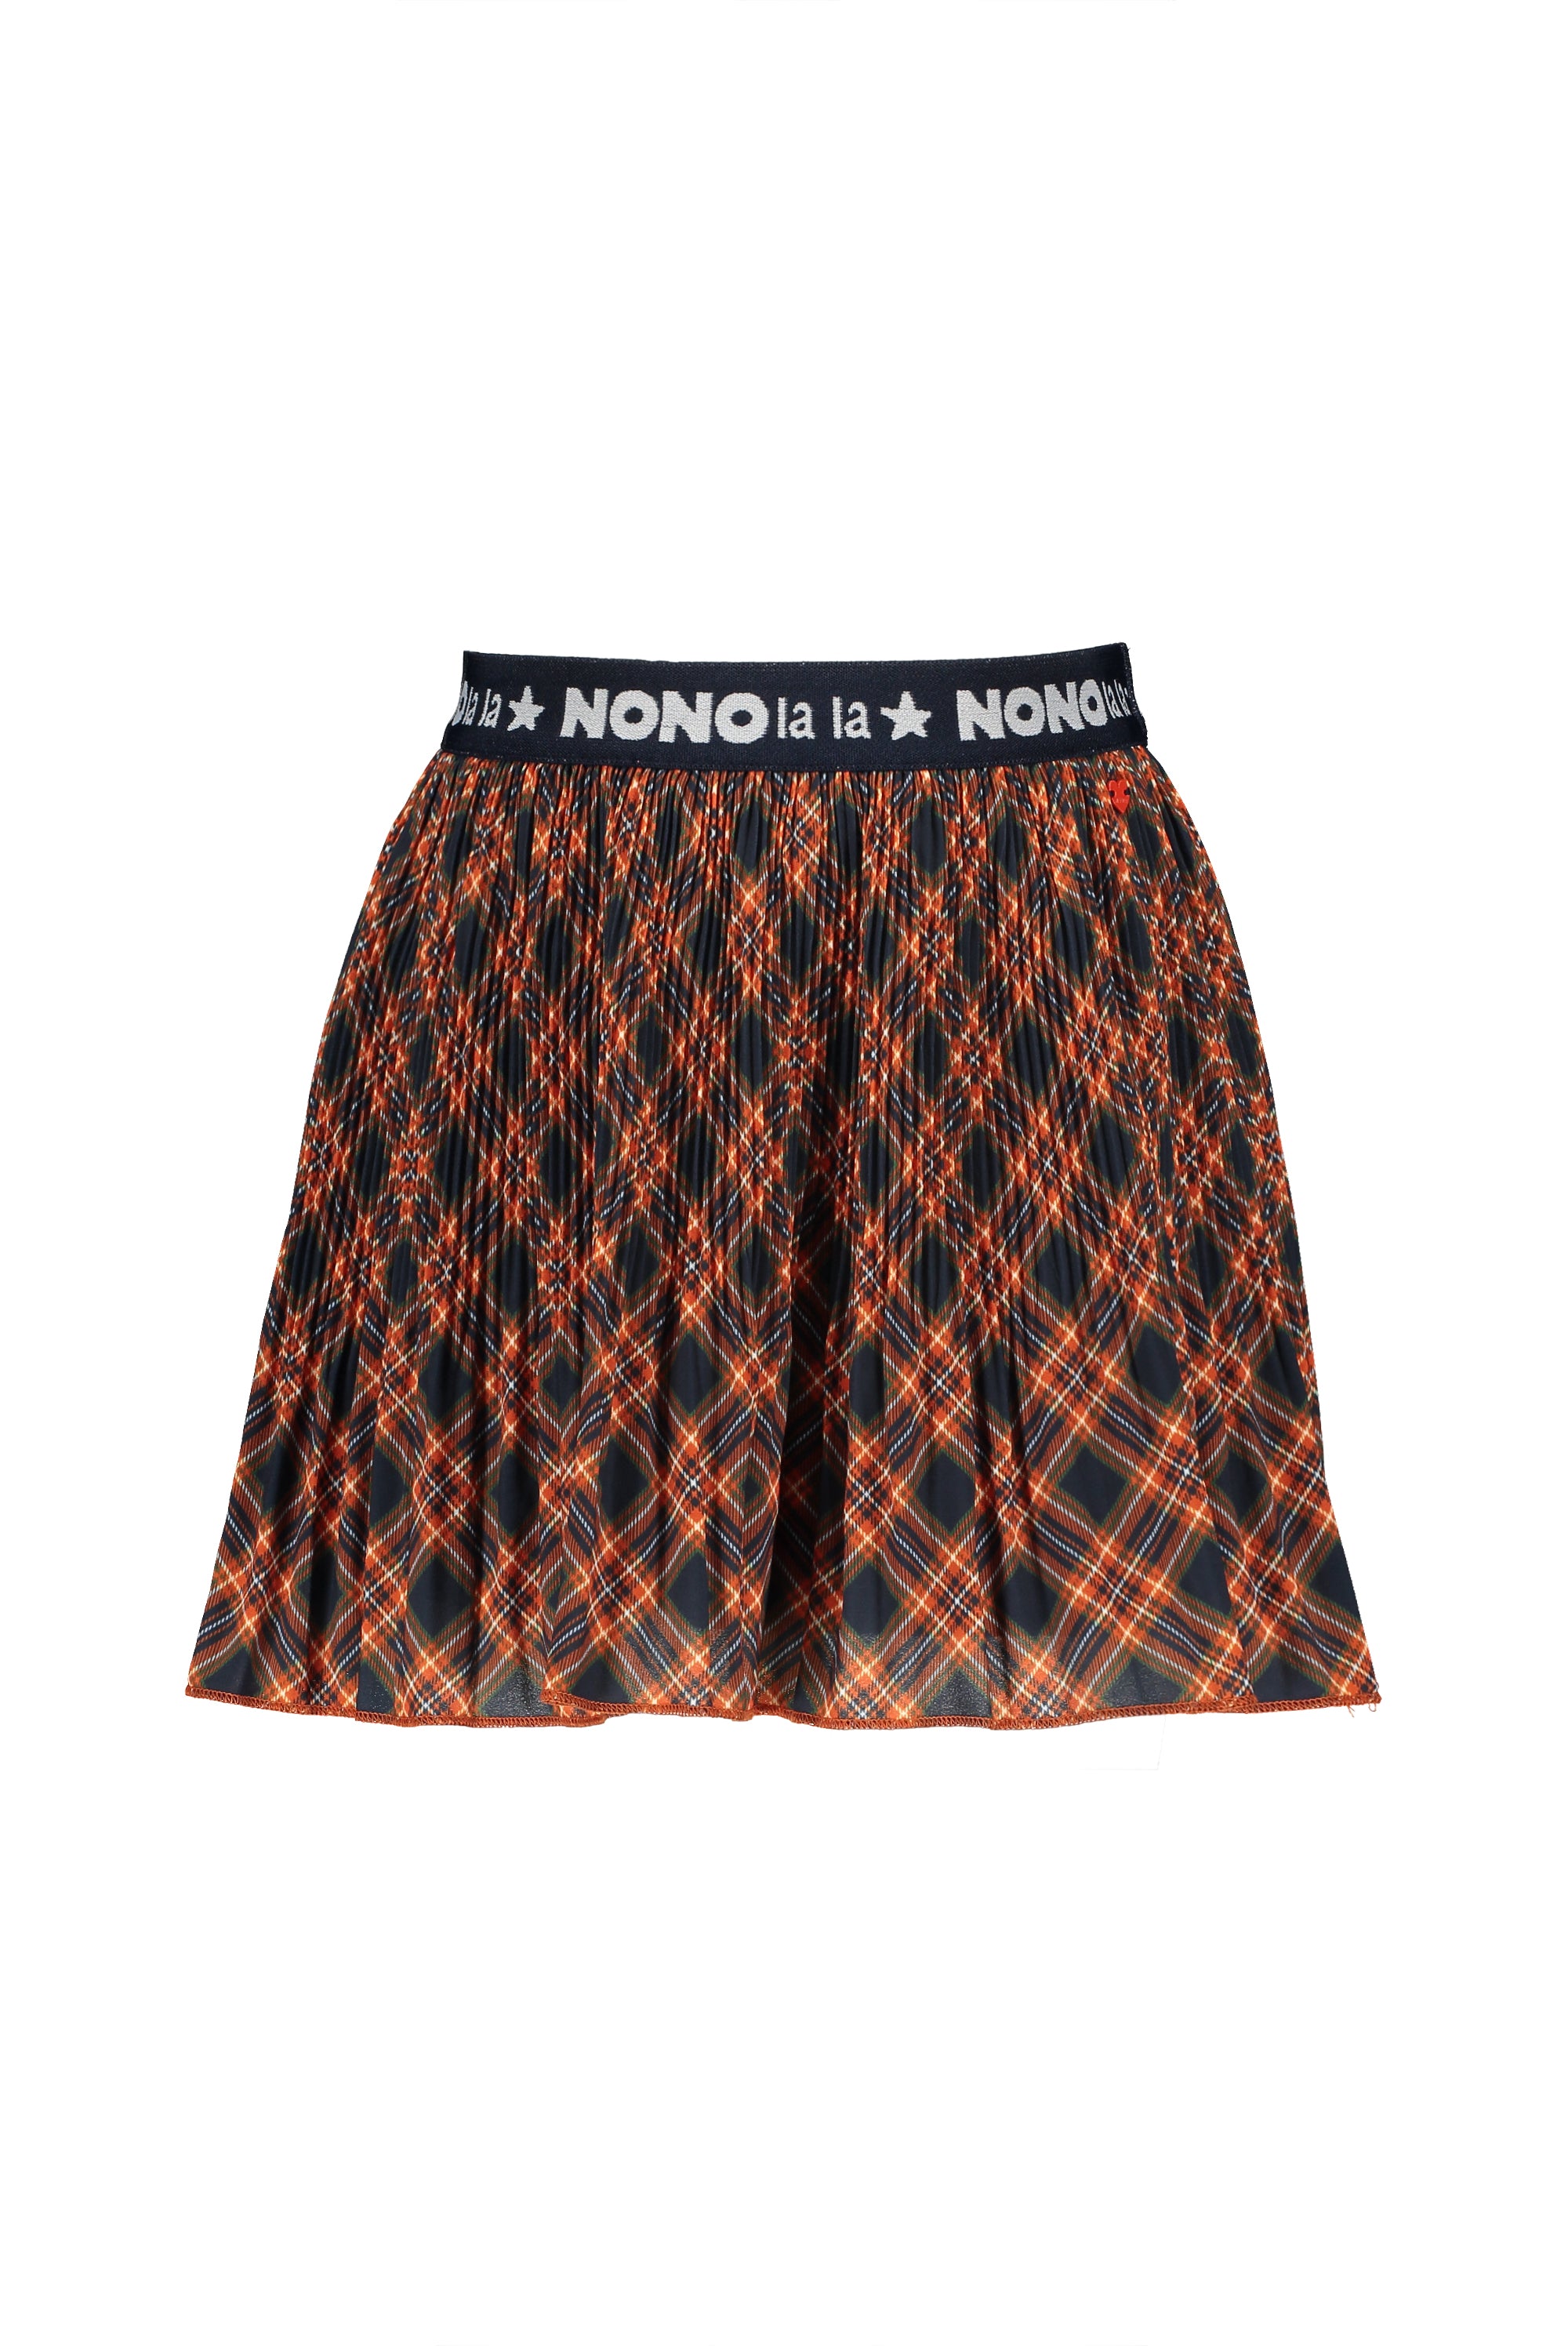 NoNo NulanB short bias check skirt with fine plissee